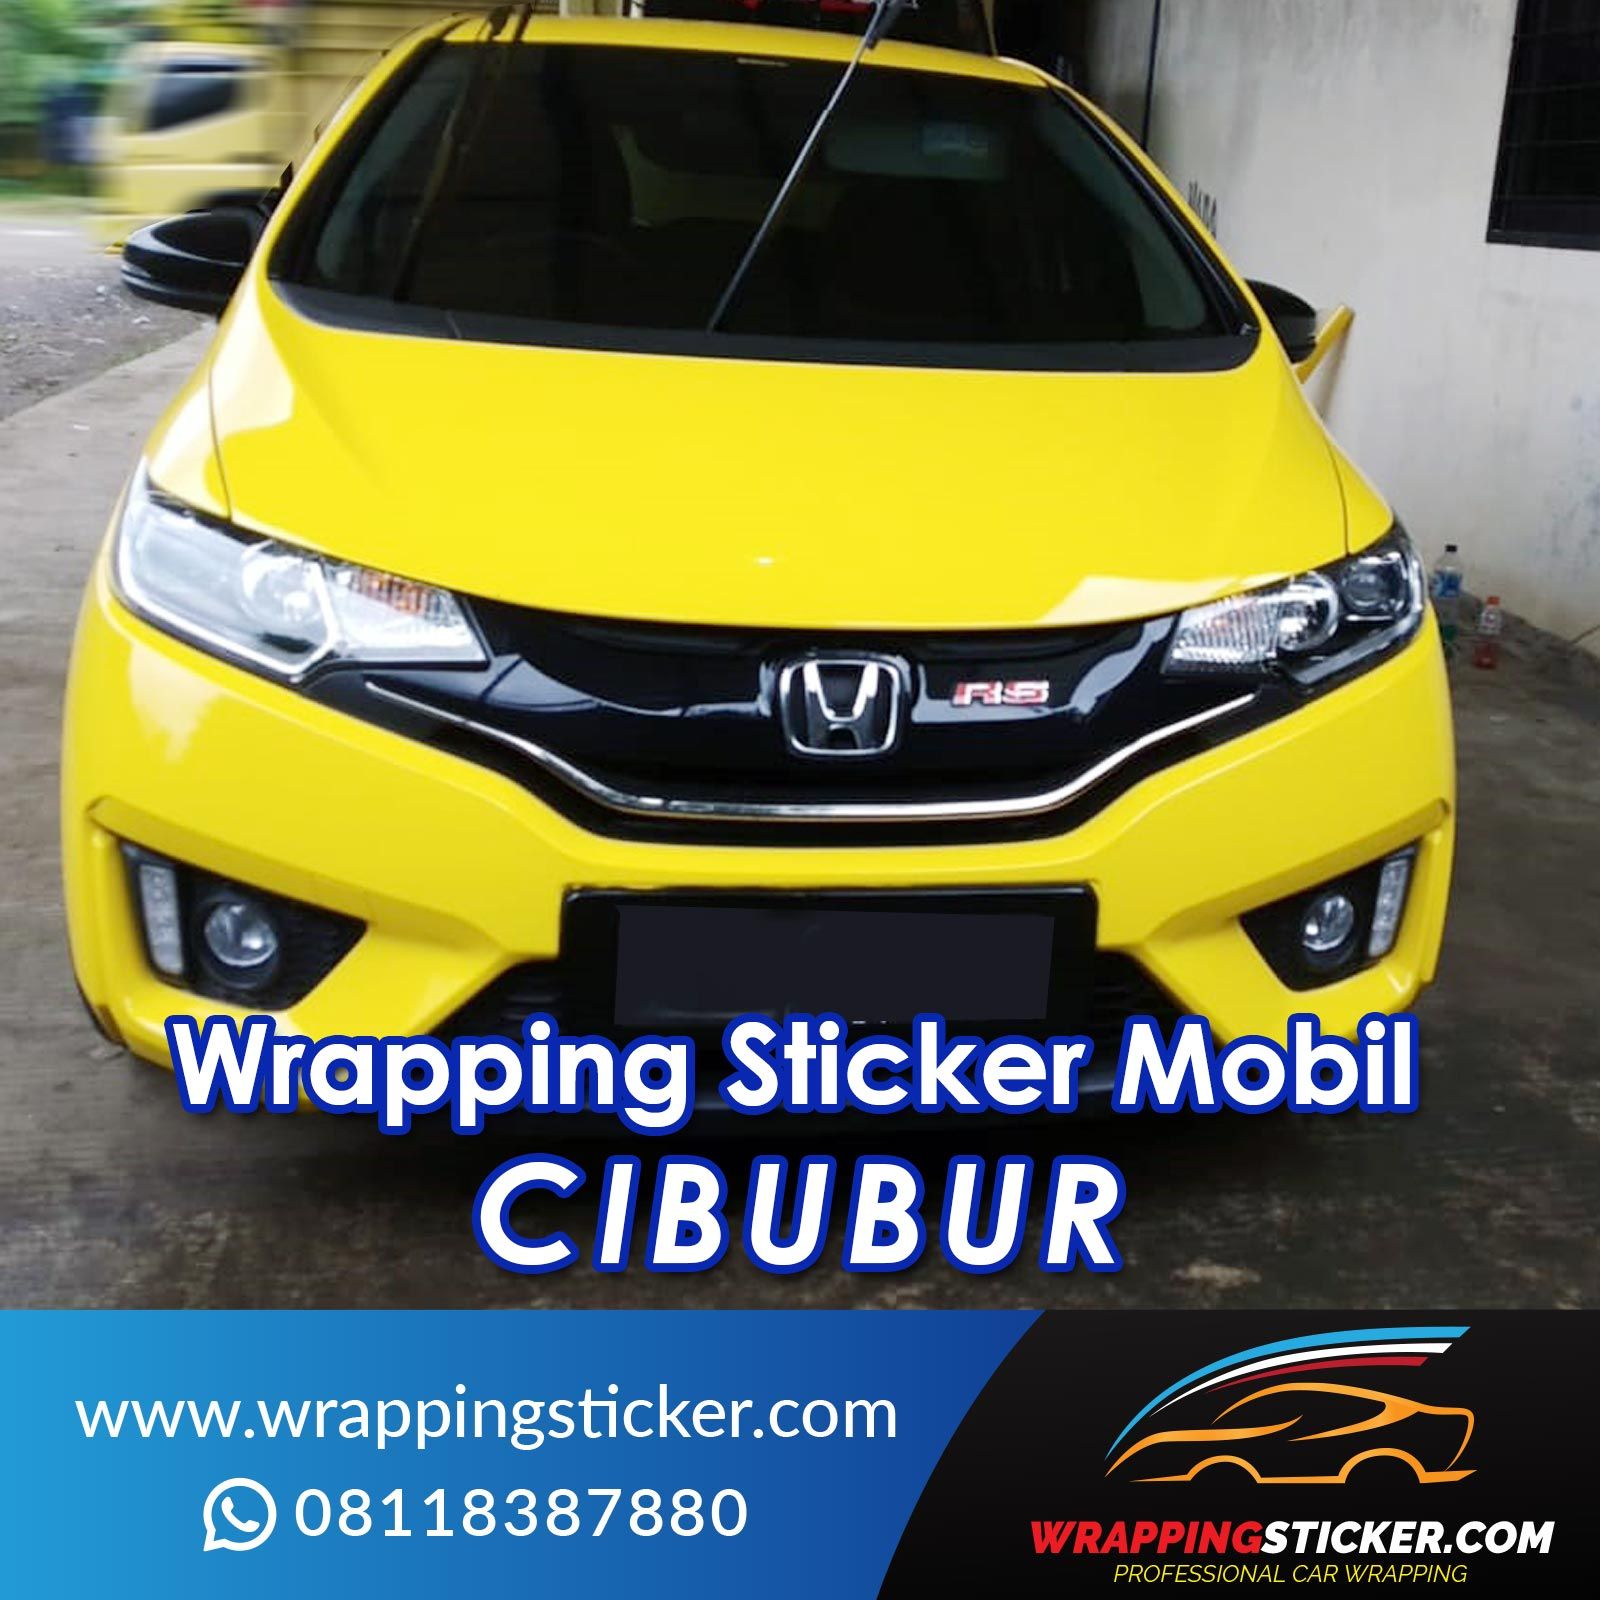 Wrapping Sticker Mobil Cibubur